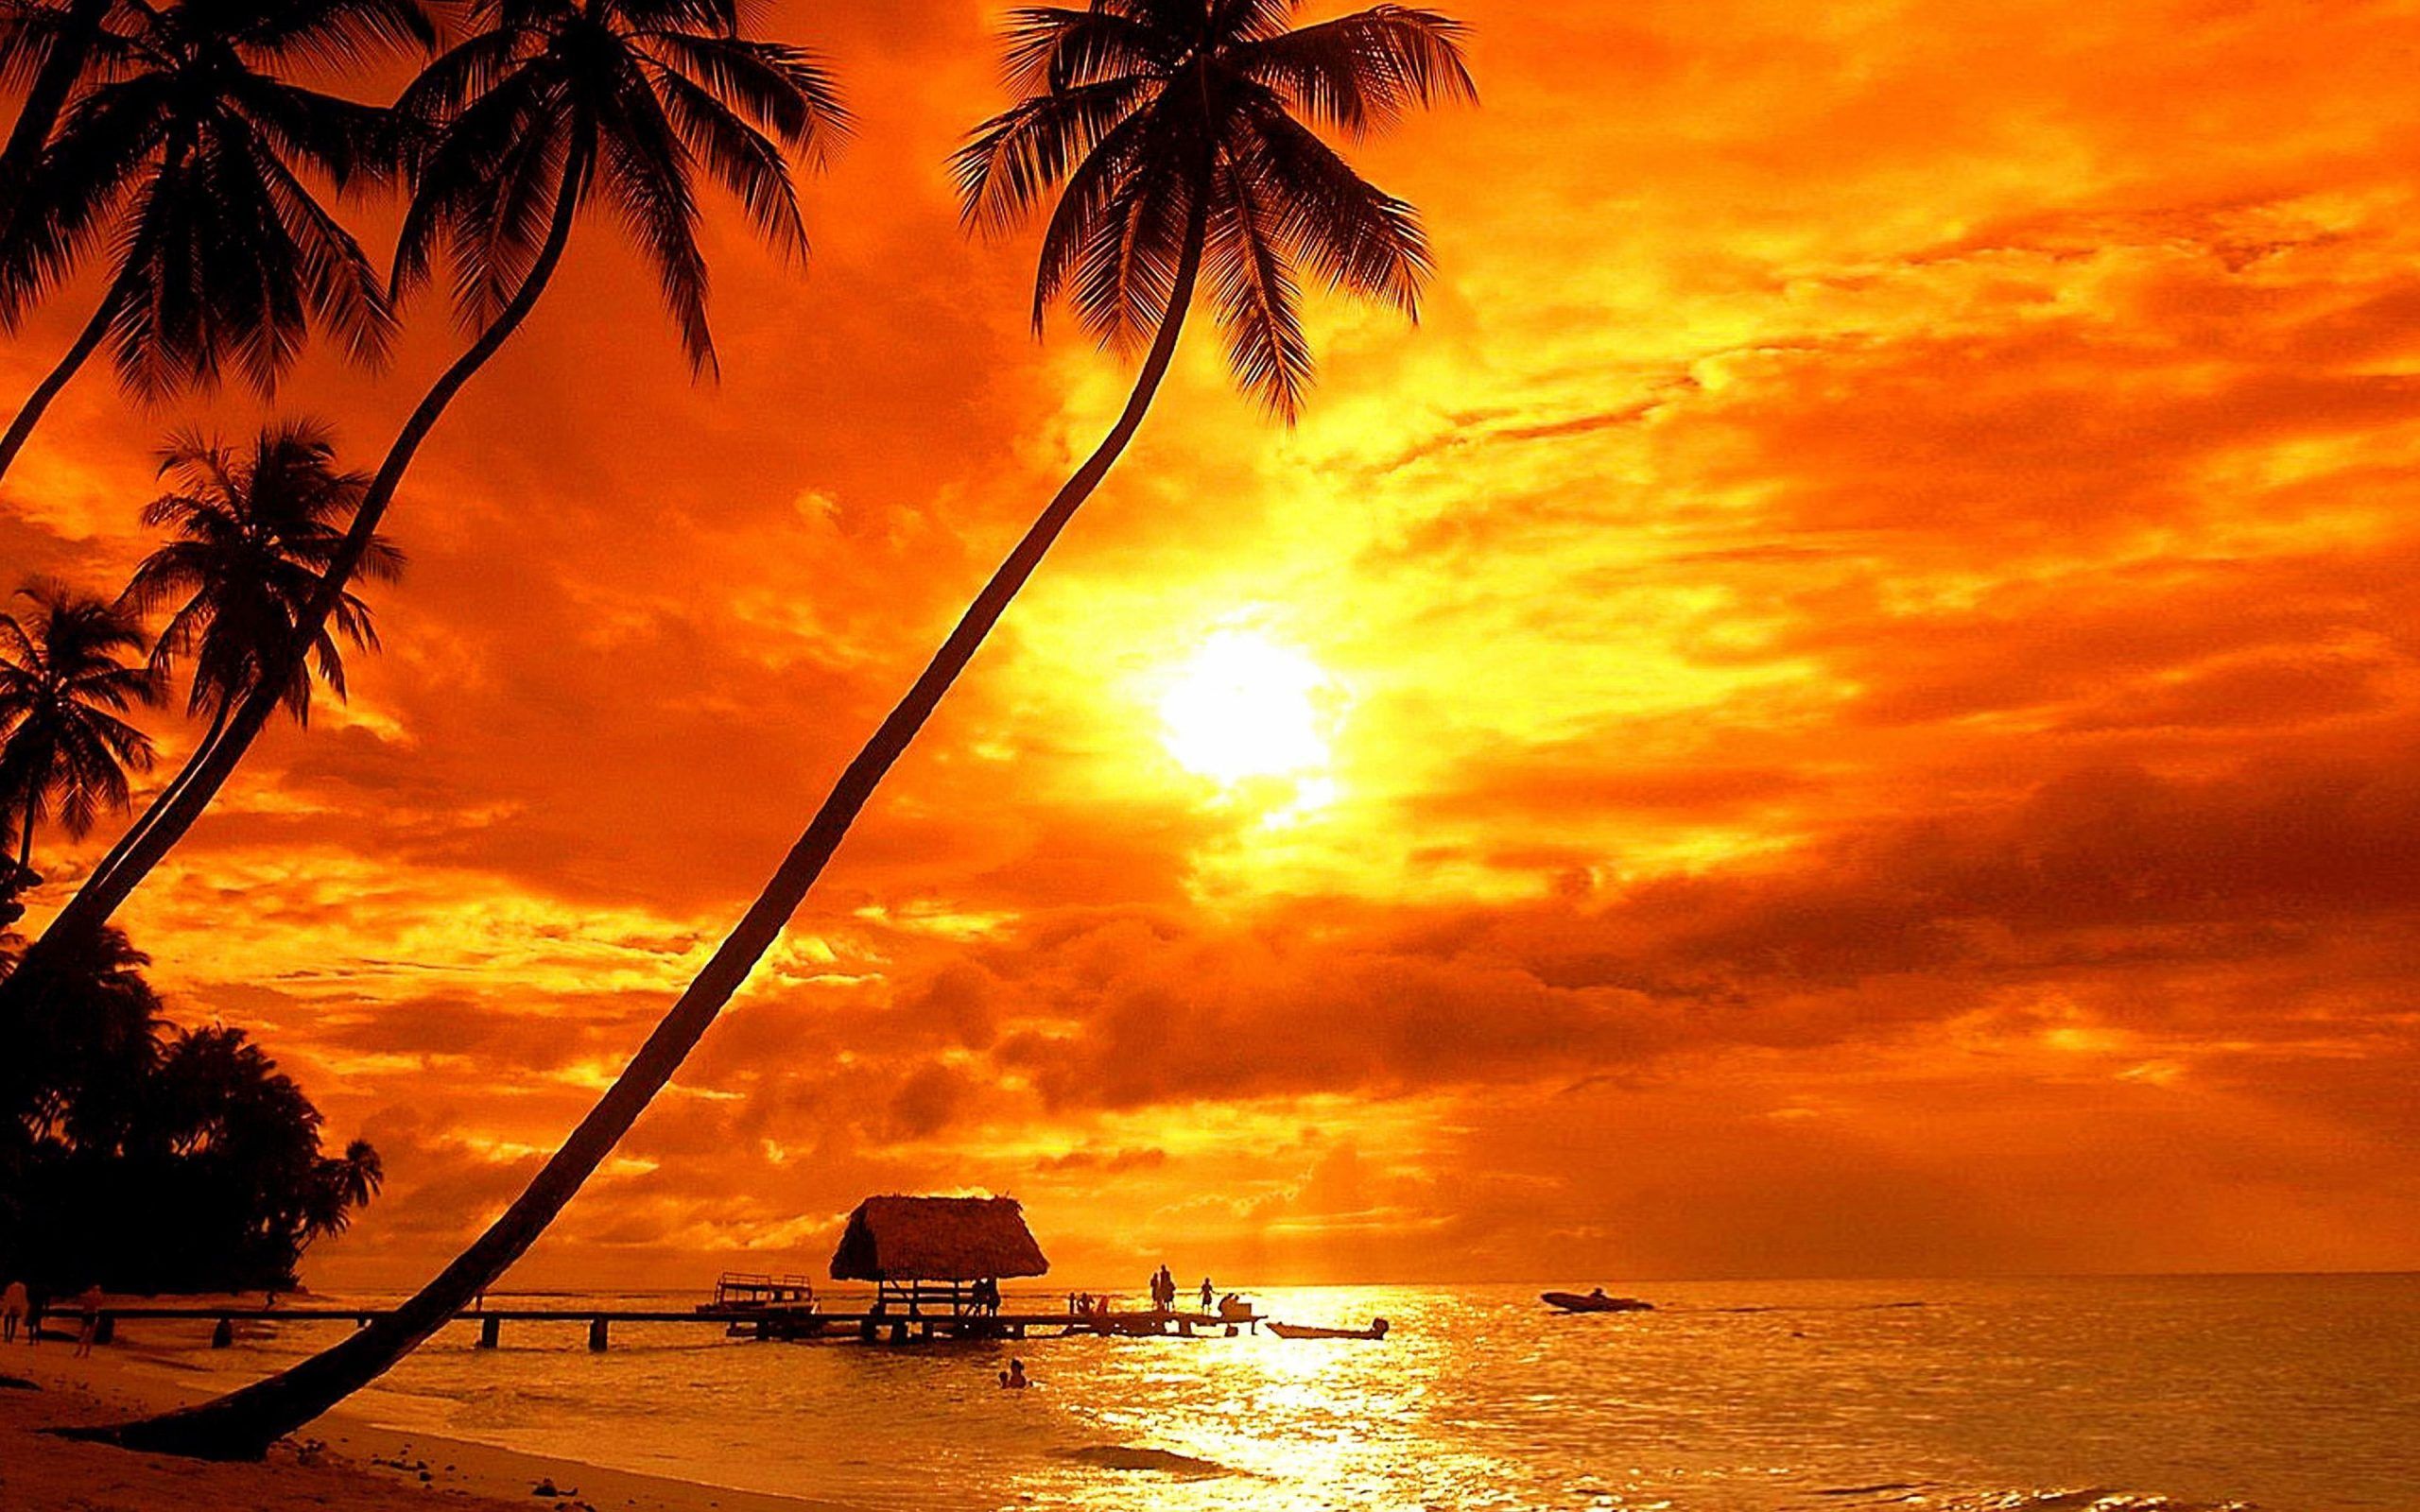 Bora Bora Tropical Sunset Beach Palm Trees Red Sky Clouds Ultra HD 4k Wallpaper For Desktop Laptop Tablet Mobile Phones And Tv 3840х2400 • Wallpaper For You HD Wallpaper For Desktop